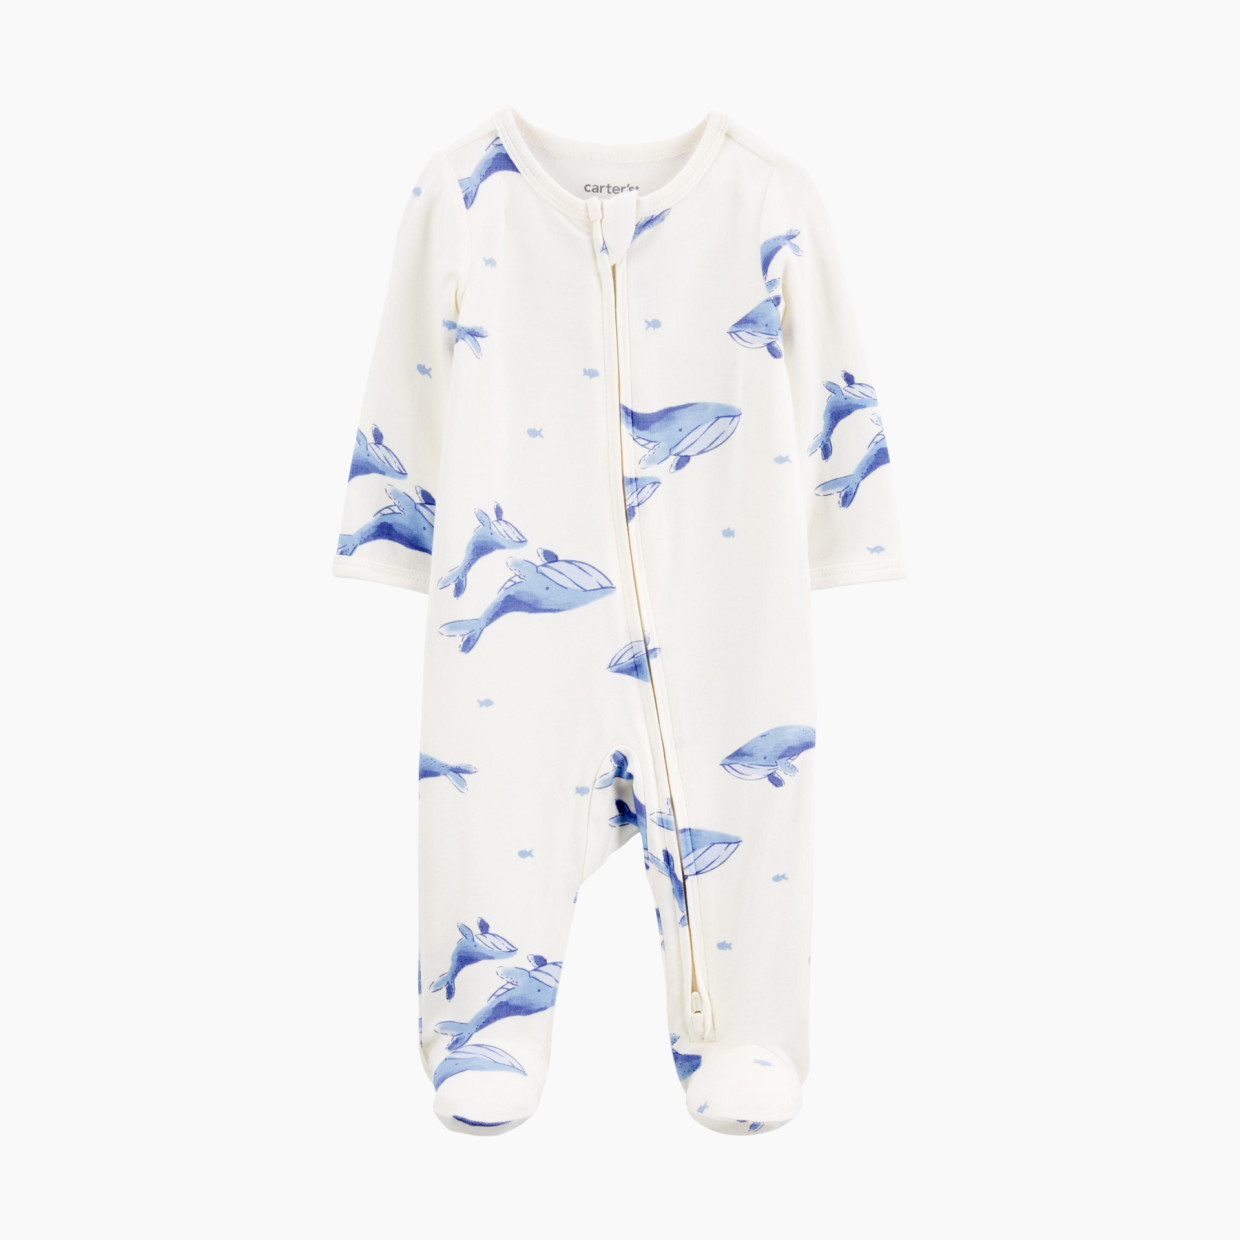 Carter's 2-Way Zip Lenzing Ecovera Sleep & Play Pajamas - Ivory/Blue, 3 M.